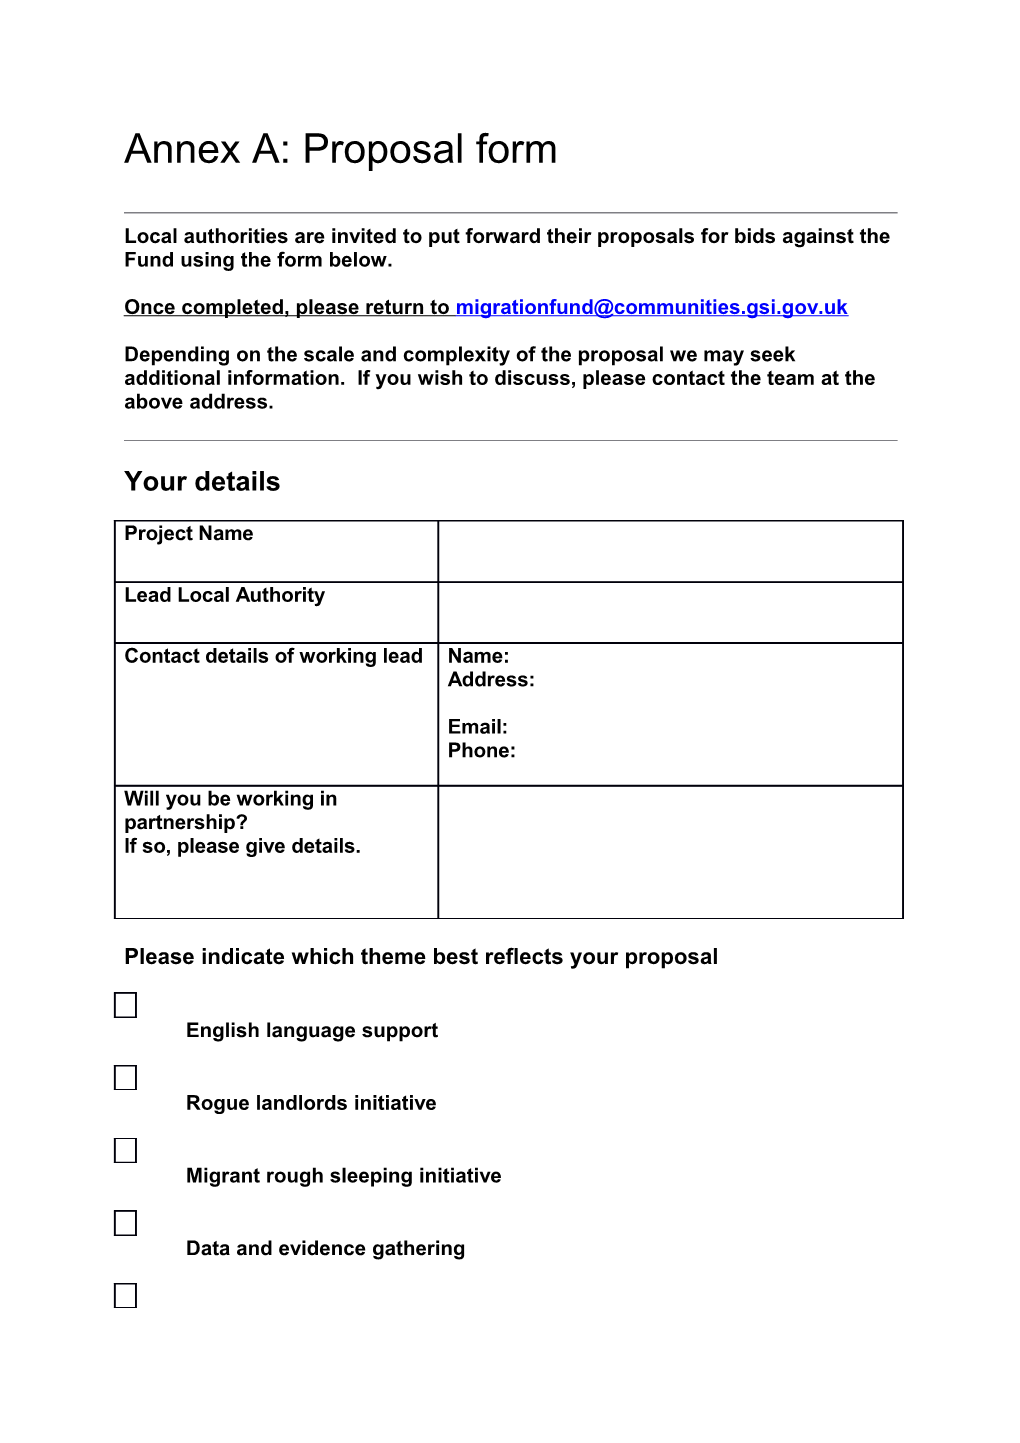 Annex A: Proposal Form